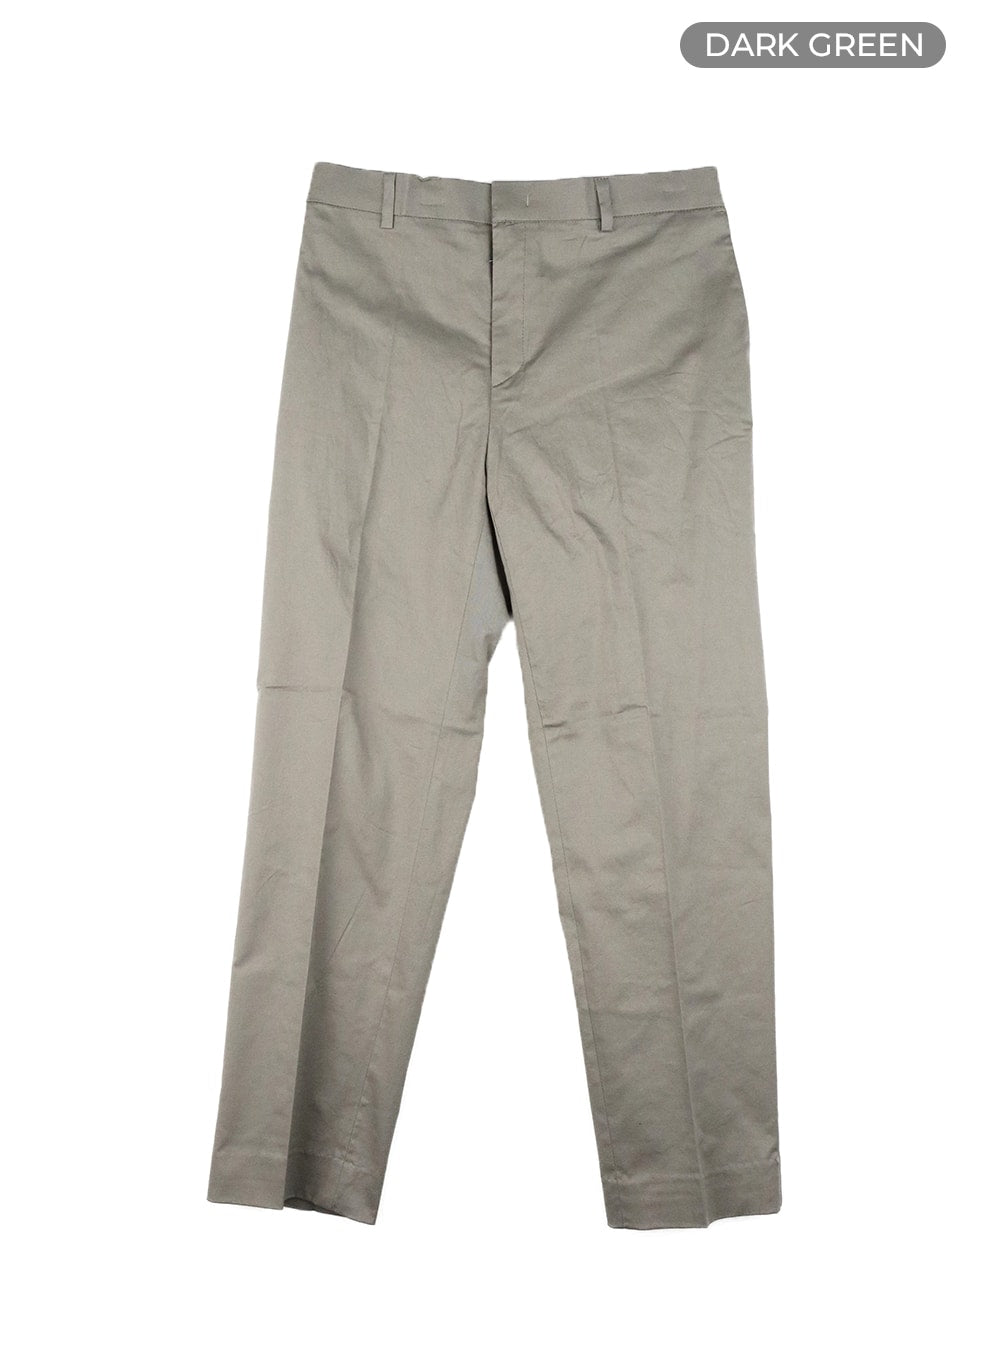 mens-classic-straight-trousers-ia401 / Dark green